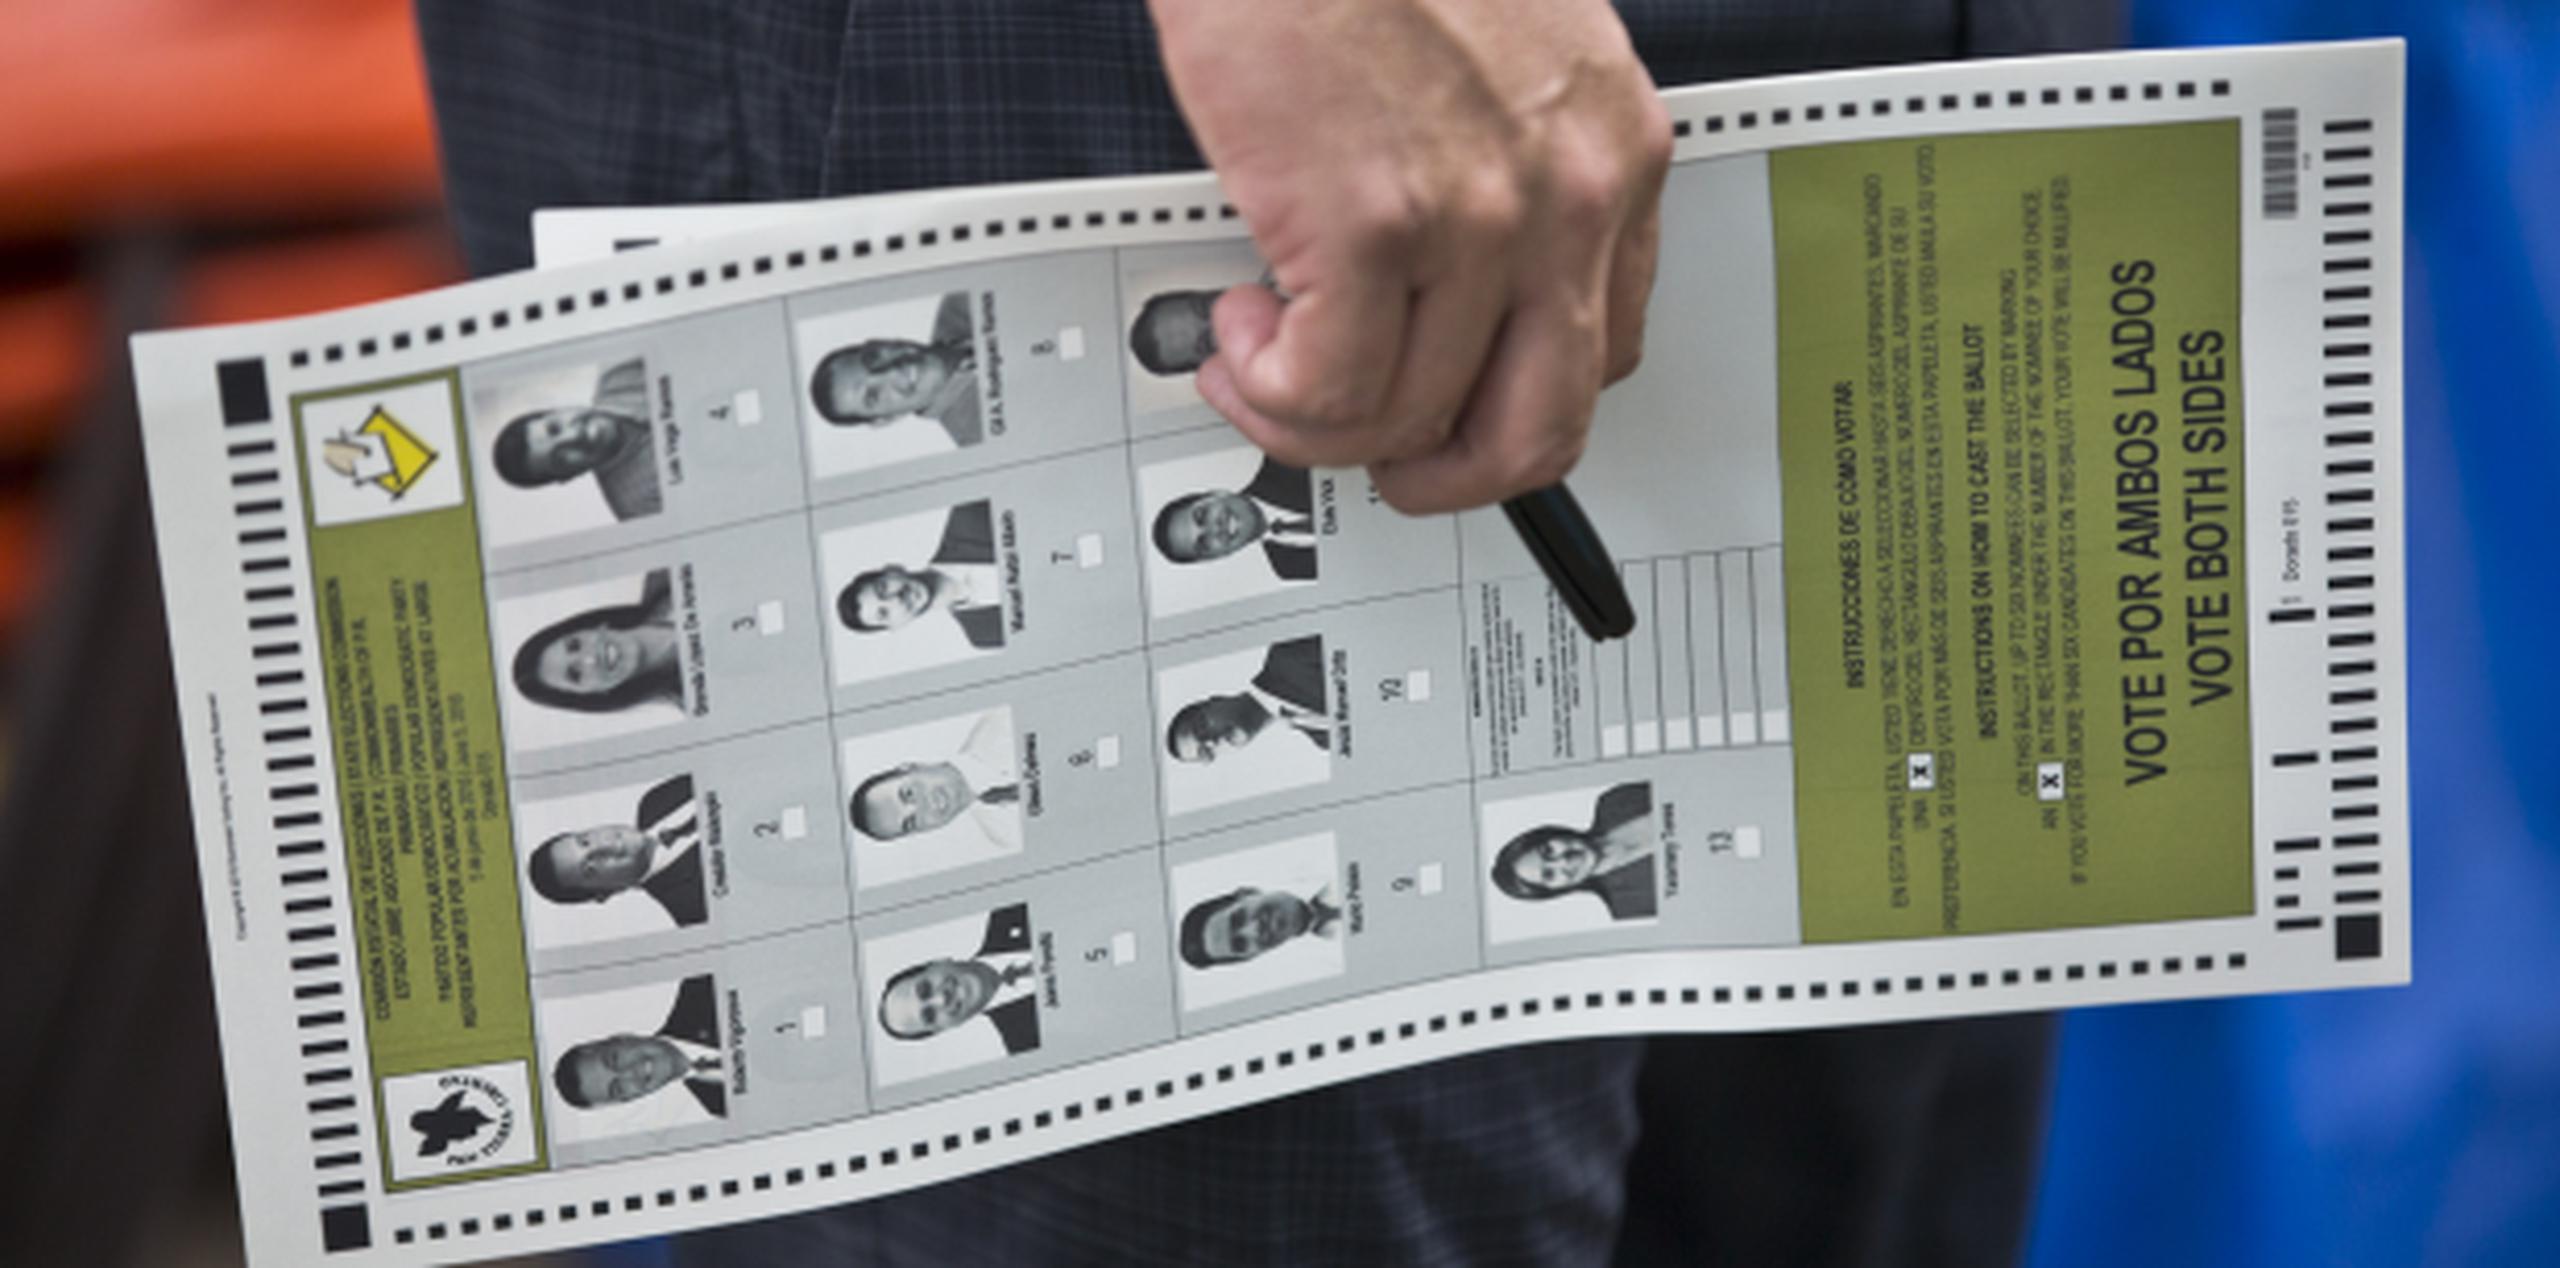 El elector tenía que esperar por un reemplazo para poder votar. (jorge.ramirez@gfrmedia.com)